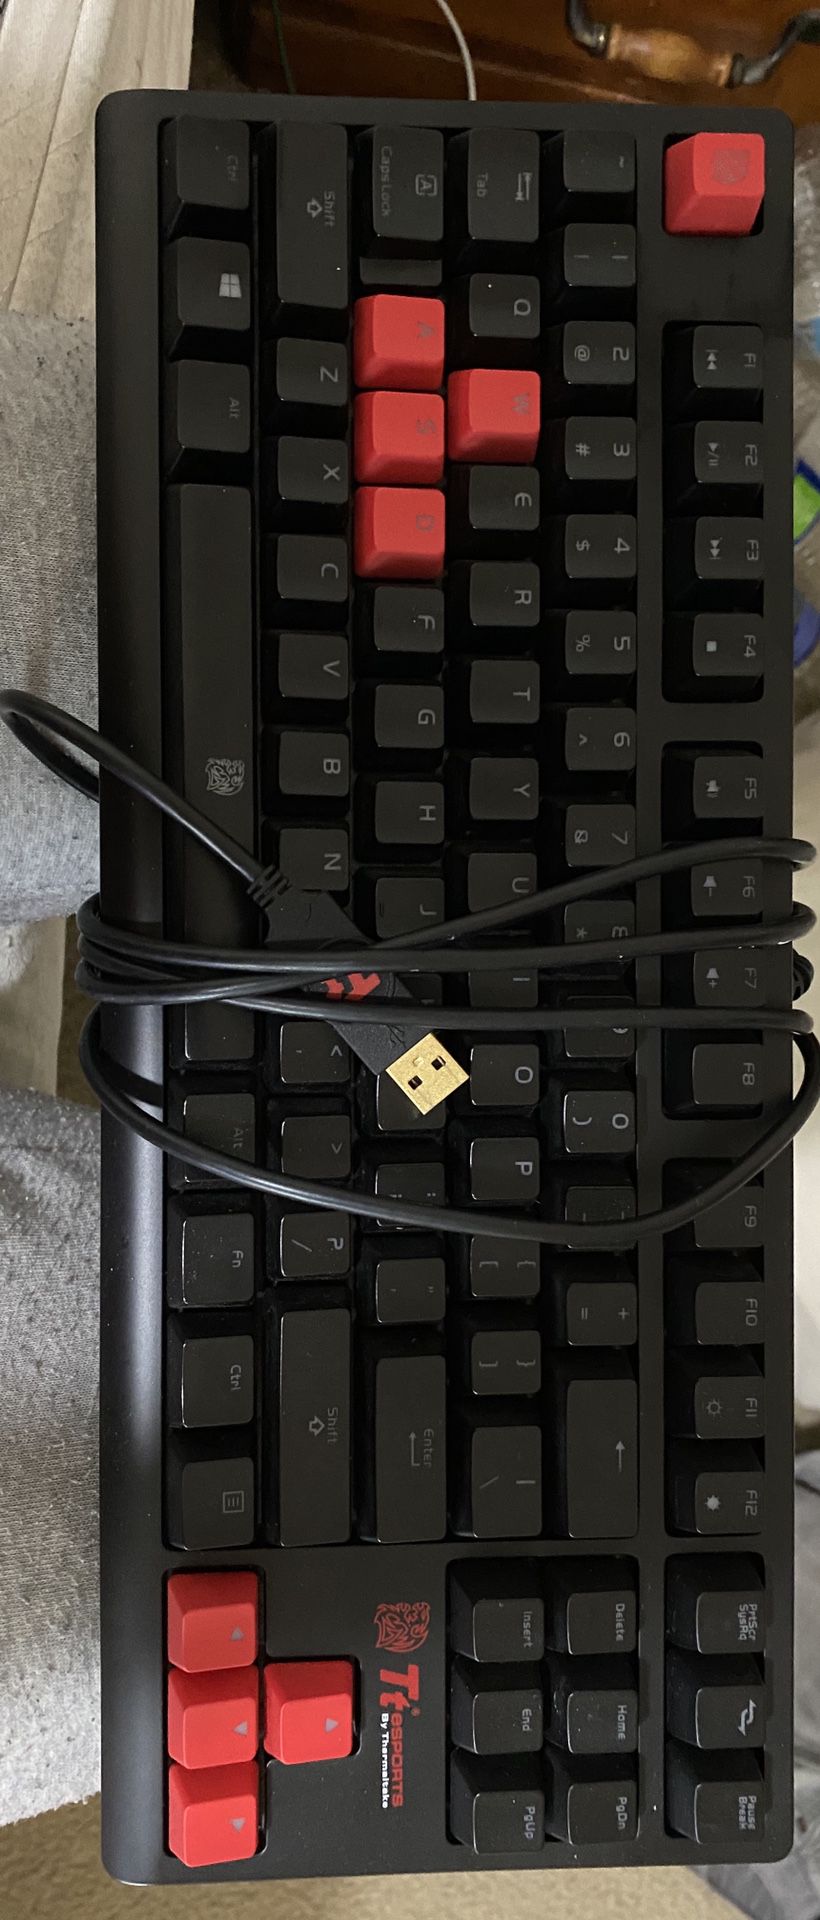 Poseidon ZX mechanical keyboard with blue switch